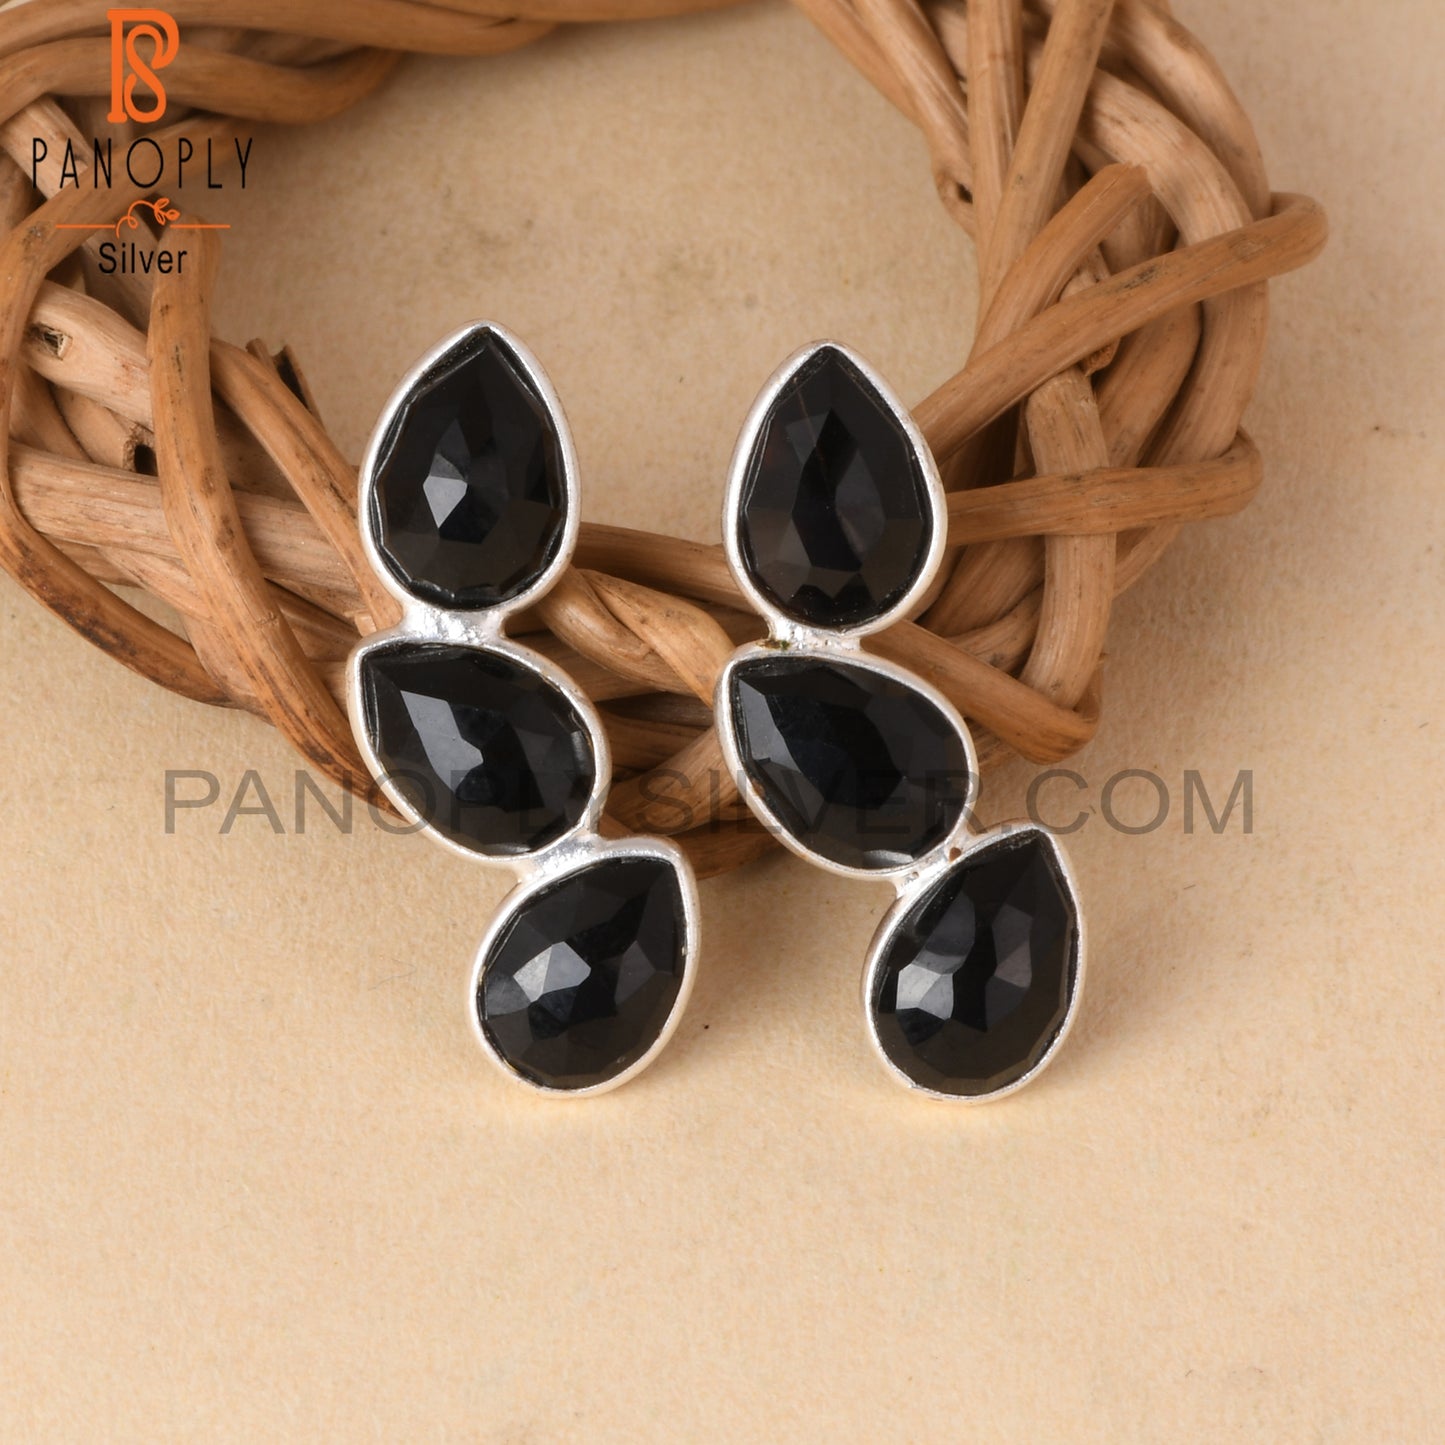 Cenuine Black Onyx Briolette Cut 3 Stone Earrings